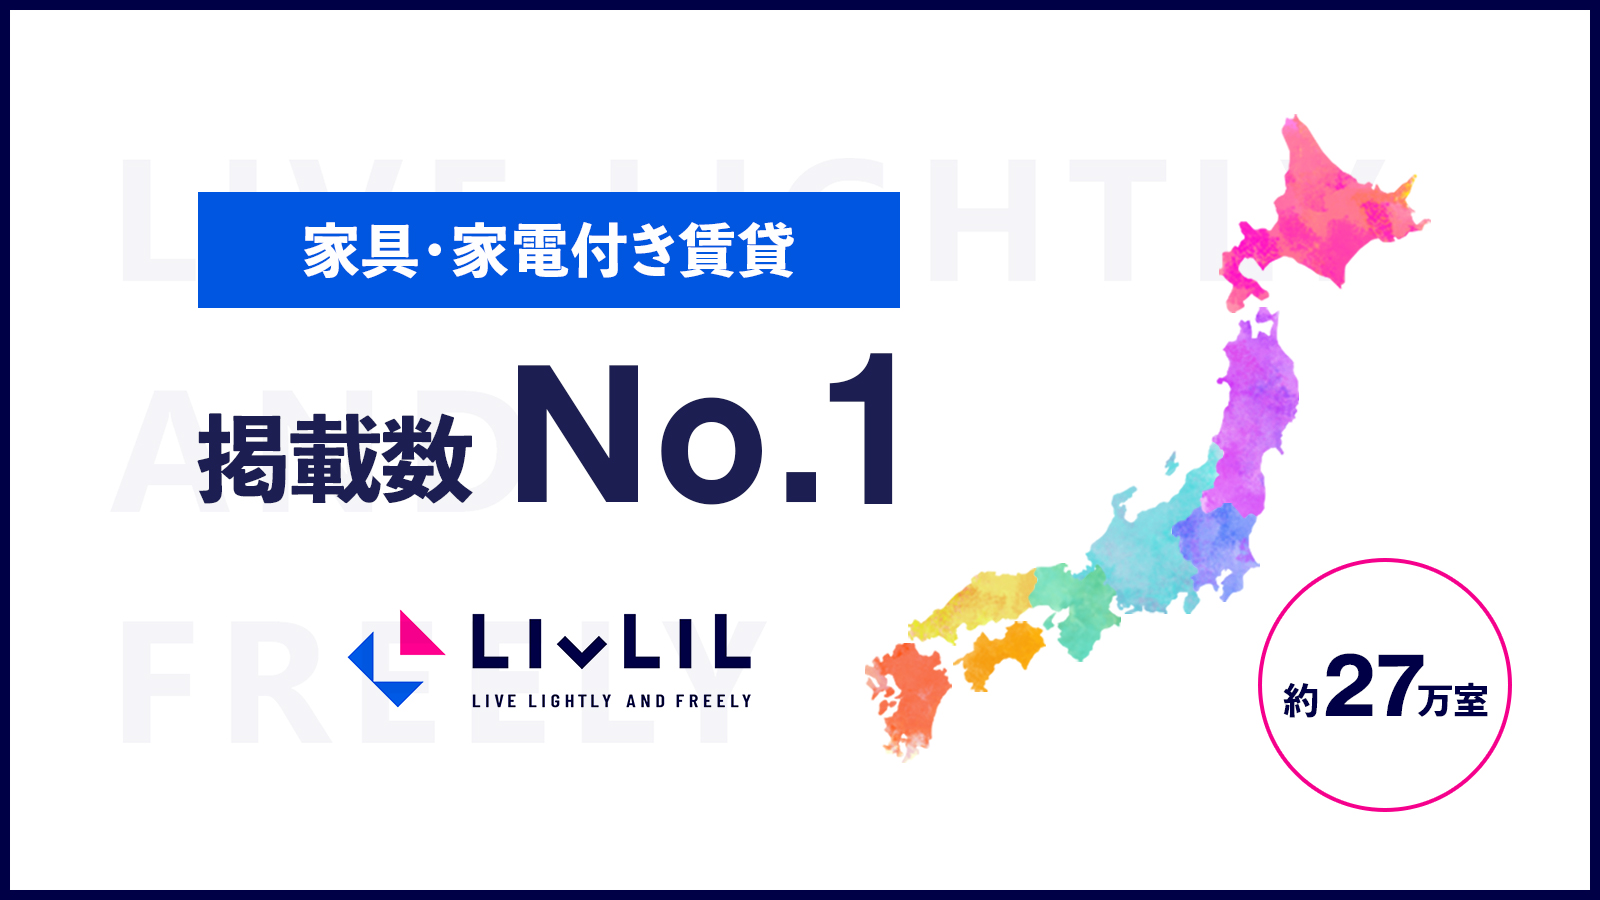 【PR】掲載物件27万室突破で日本一に！家具付き賃貸サイト「LIVLIL(リブリル)」、専用サイトとしてサービス拡大へ